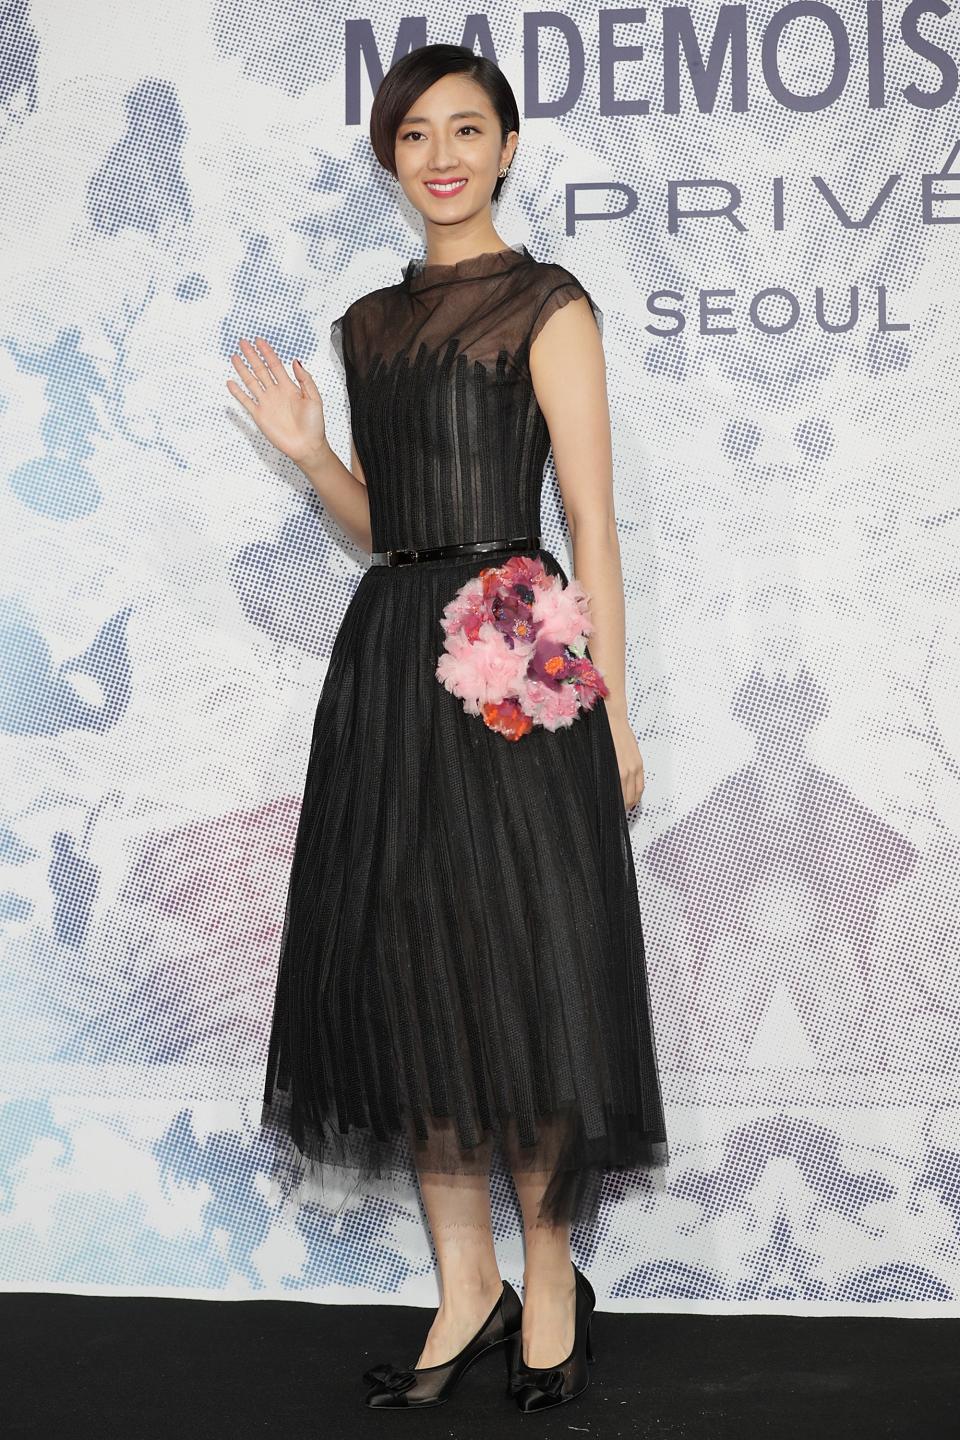 <h3>粉漾焦點</h3> <p>桂綸鎂身穿Chanel 2015年春夏高訂系列的黑紗禮服出席在首爾舉辦的Chanel《Mademoiselle Privé》展覽。禮服上不對稱的紋路及腰間下的精美花朵刺繡為一身黑的造型點亮目光焦點。</p> <cite>Getty Images</cite>